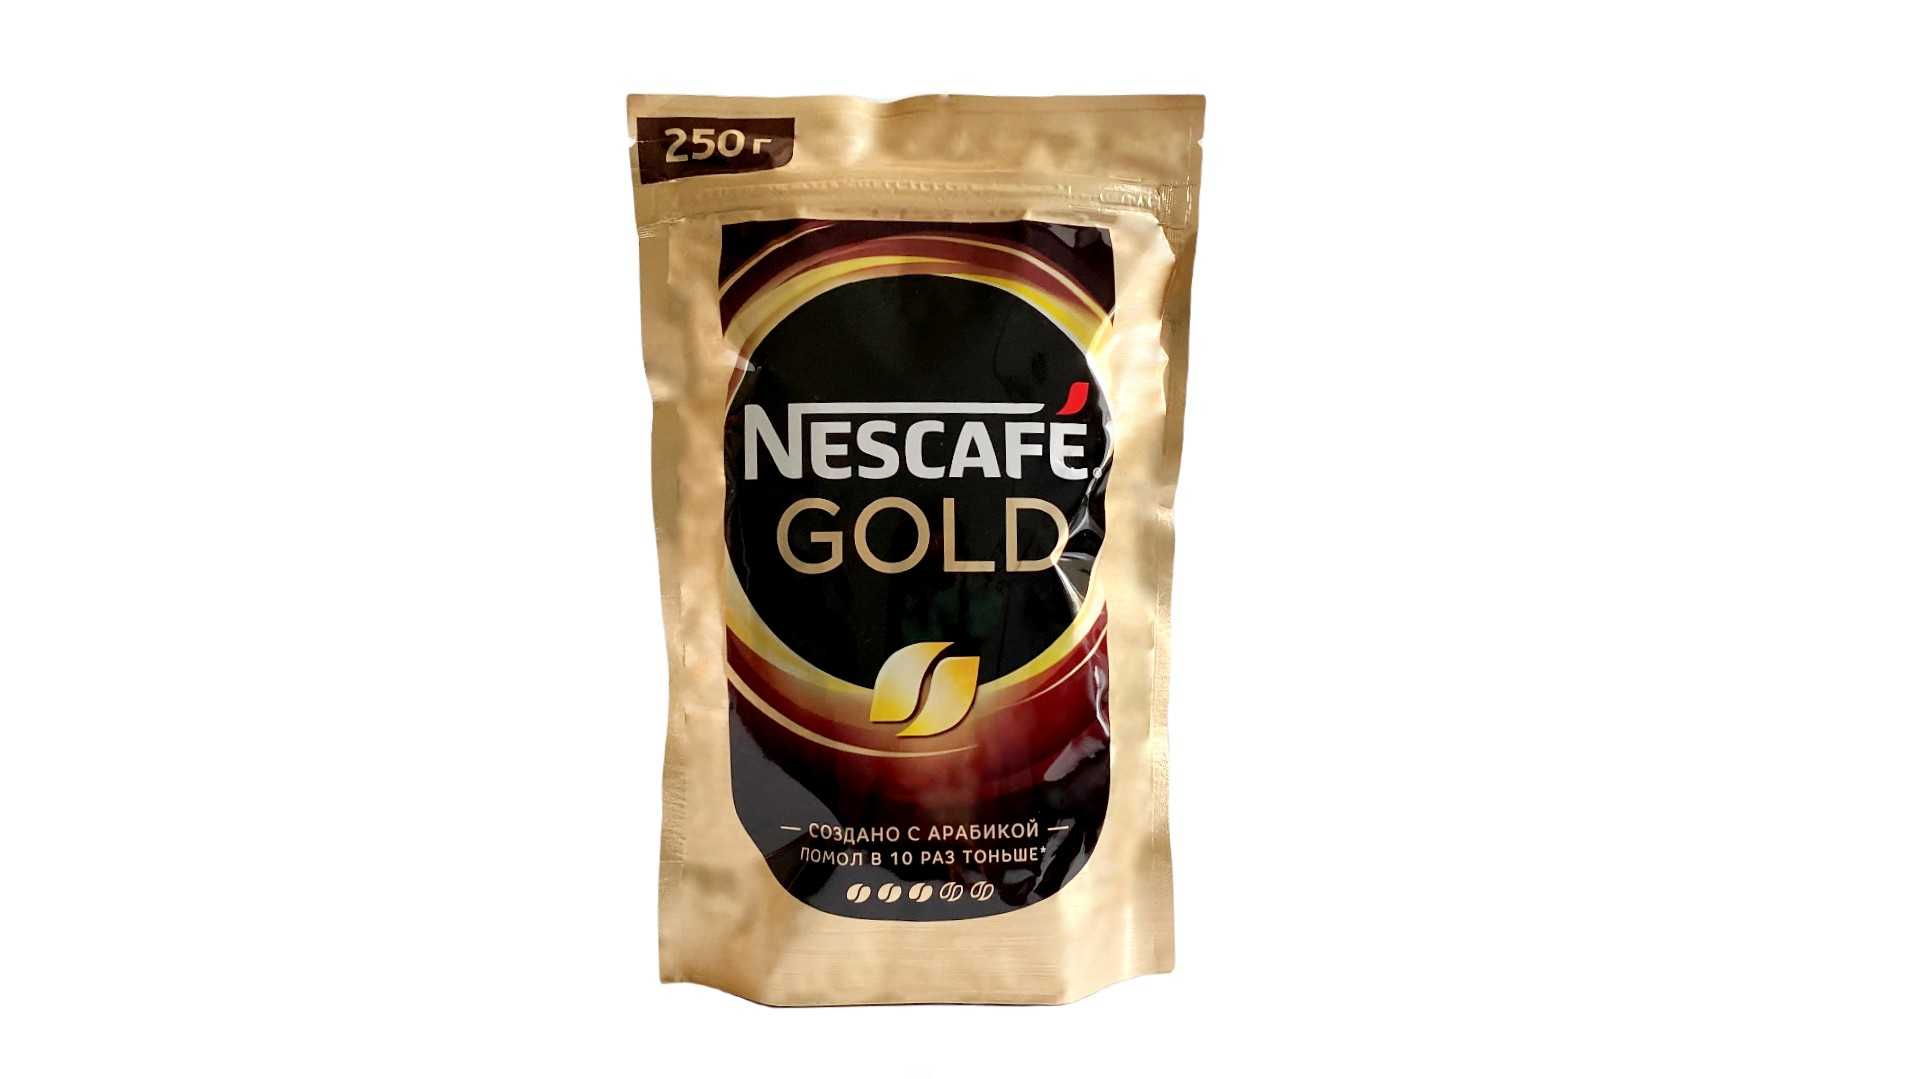 Nescafe gold 320. Nescafe Gold 220 г. Нескафе Голд 250 гр. Кофе Нескафе Голд 220г пакет. Nescafe Gold 150.